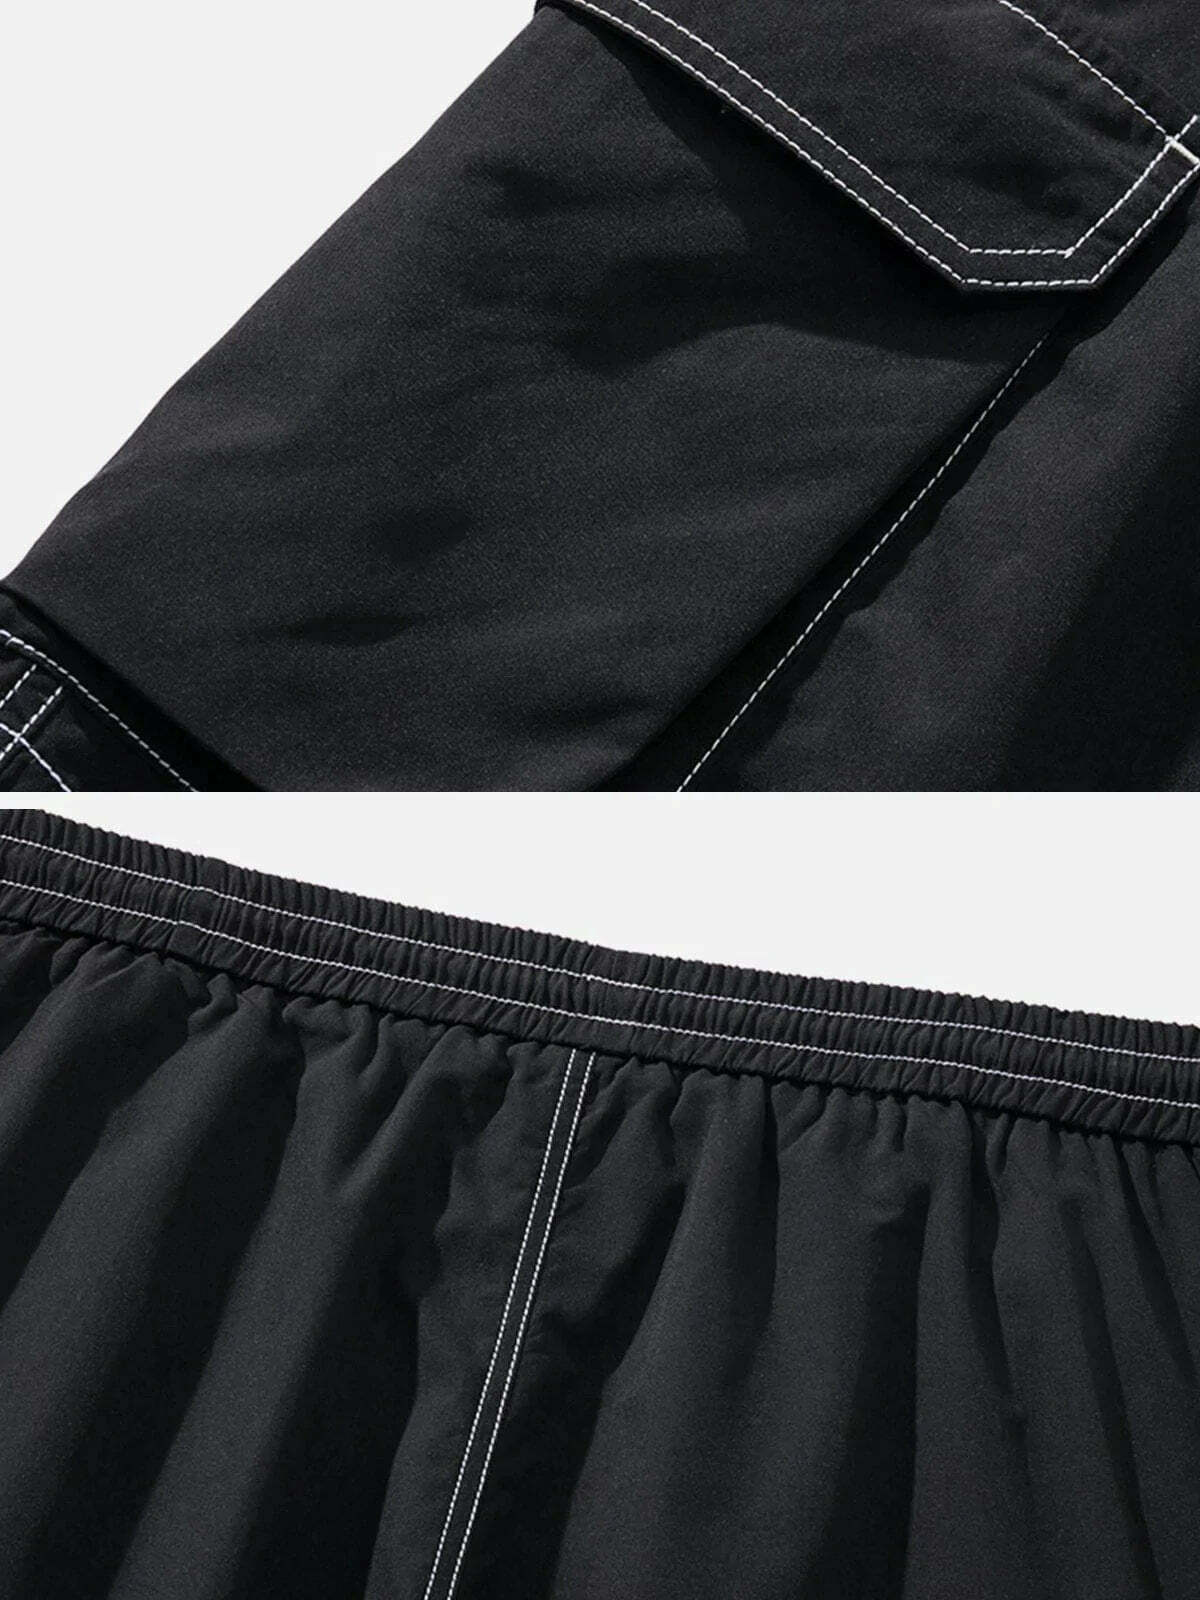 denim pocket panel shorts edgy streetwear essential 5273